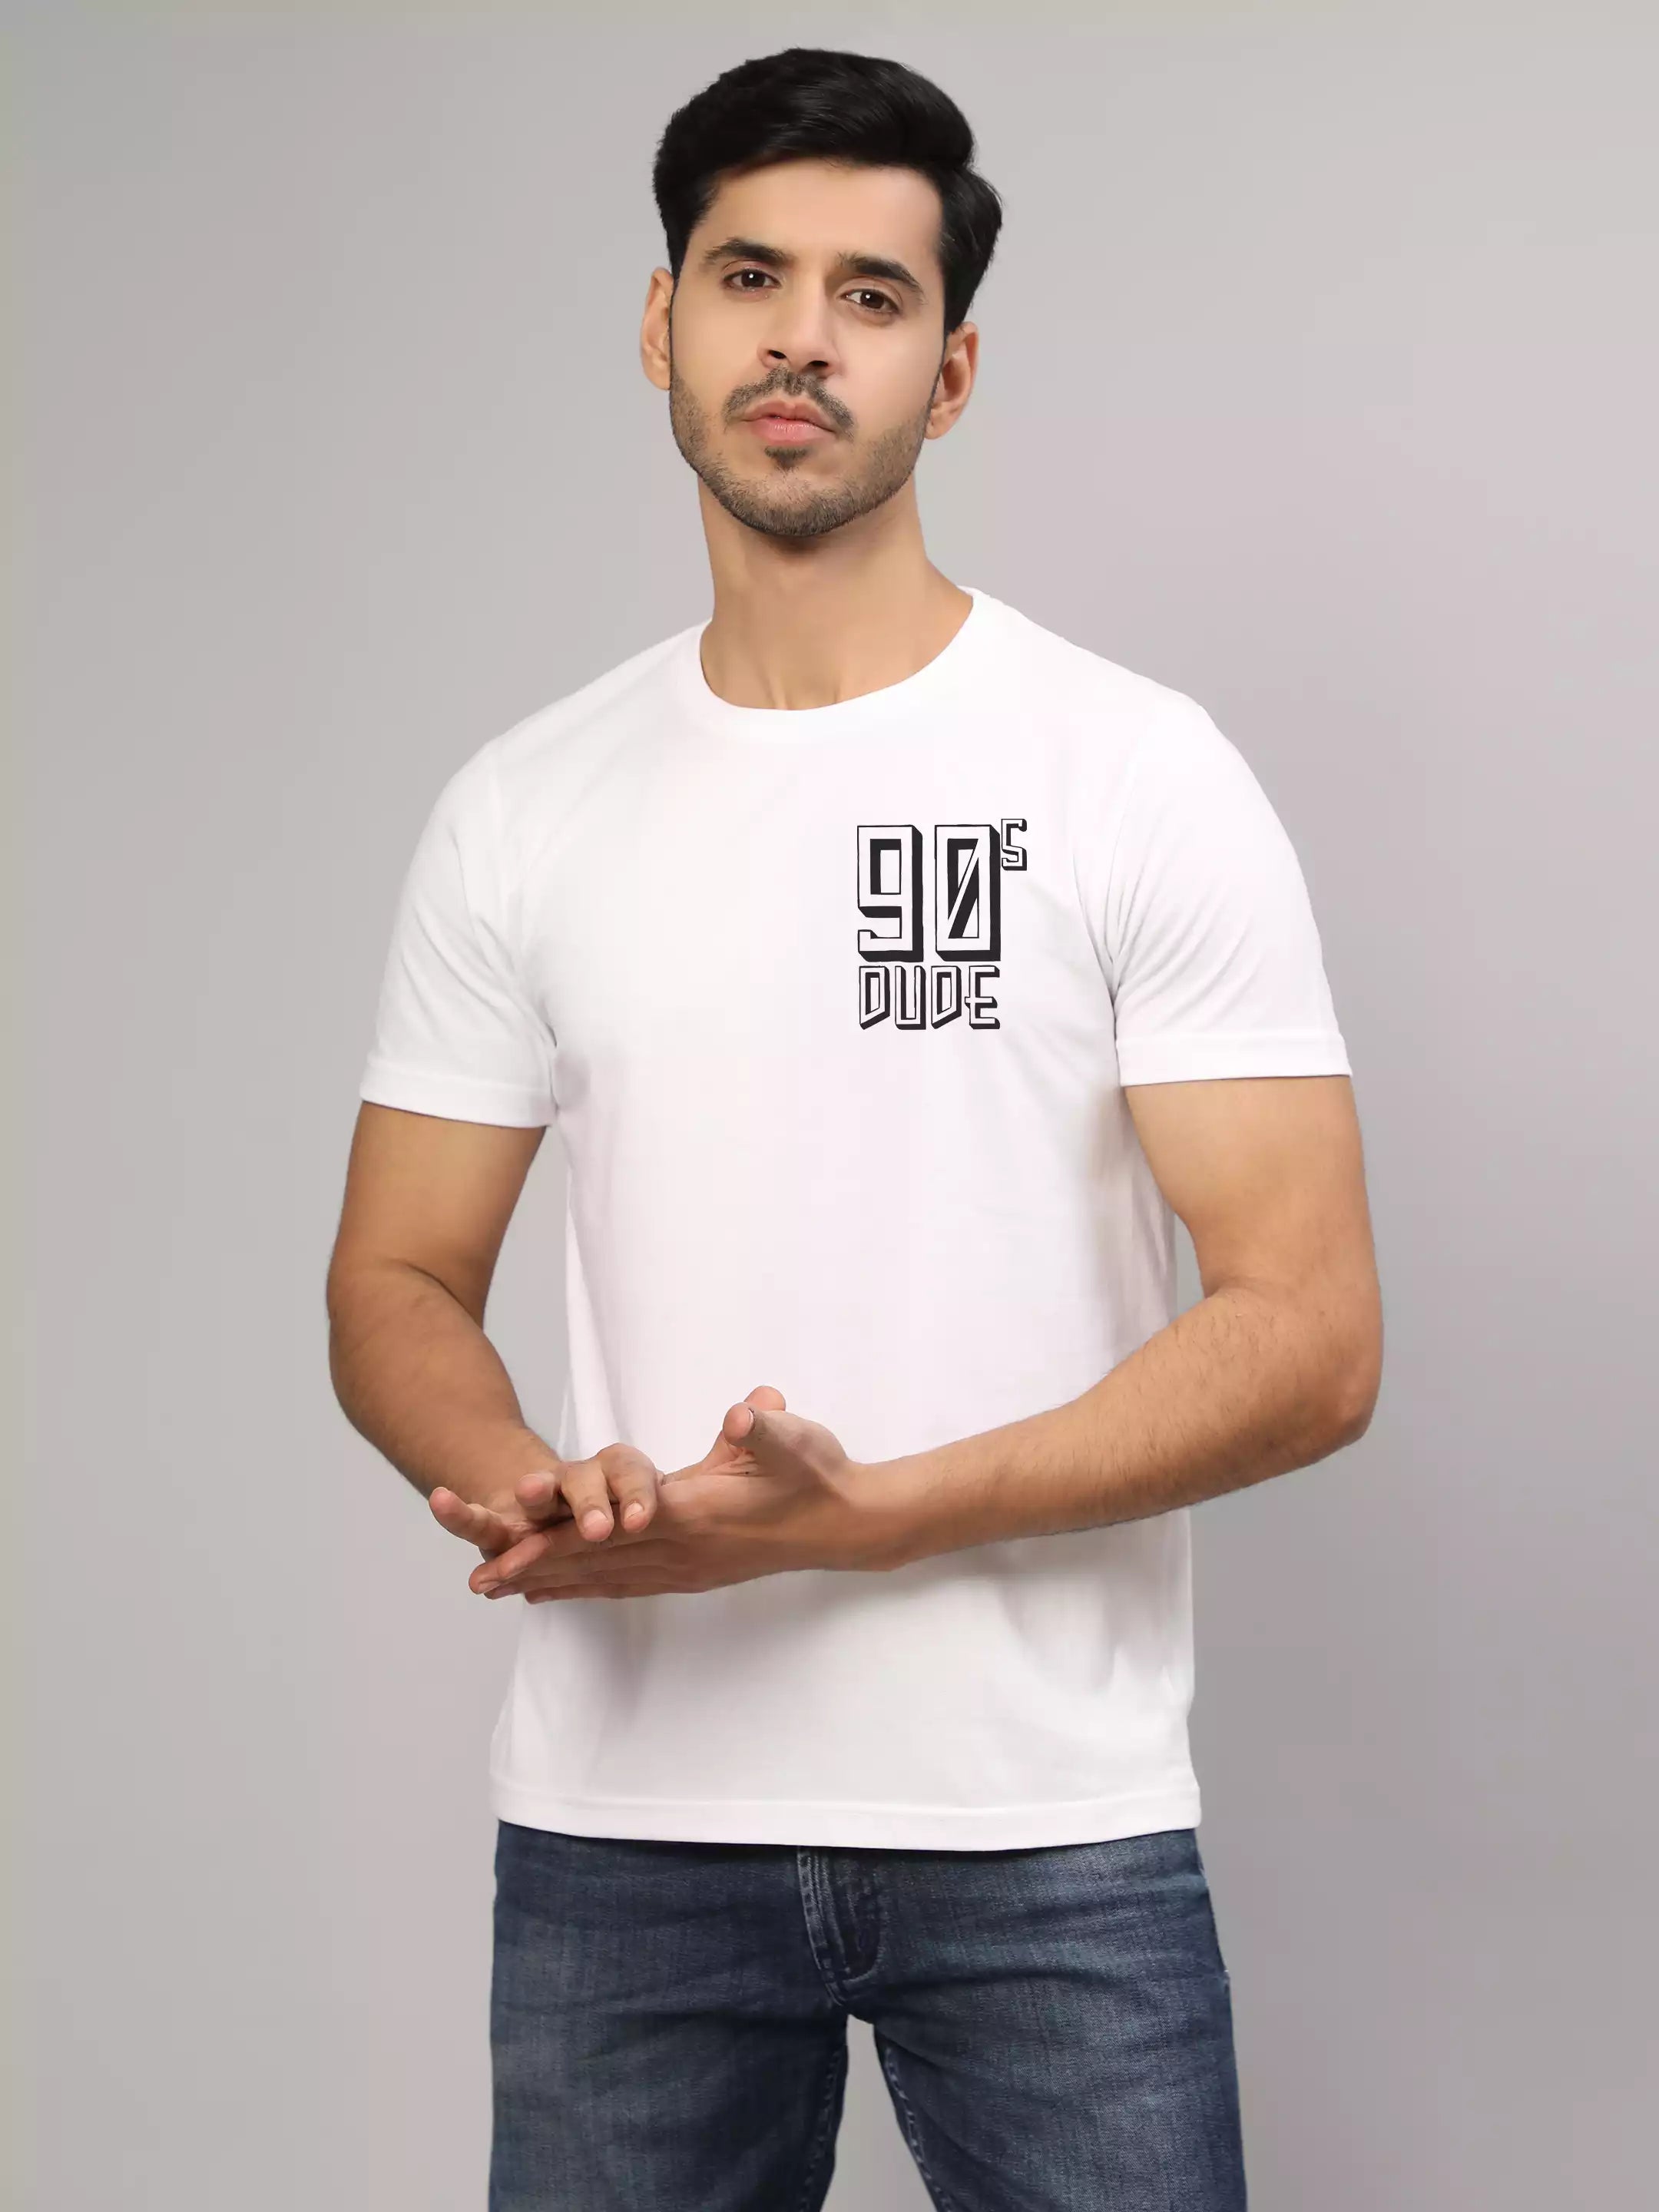 90s dude - Sukhiaatma Unisex Graphic Printed White T-shirt